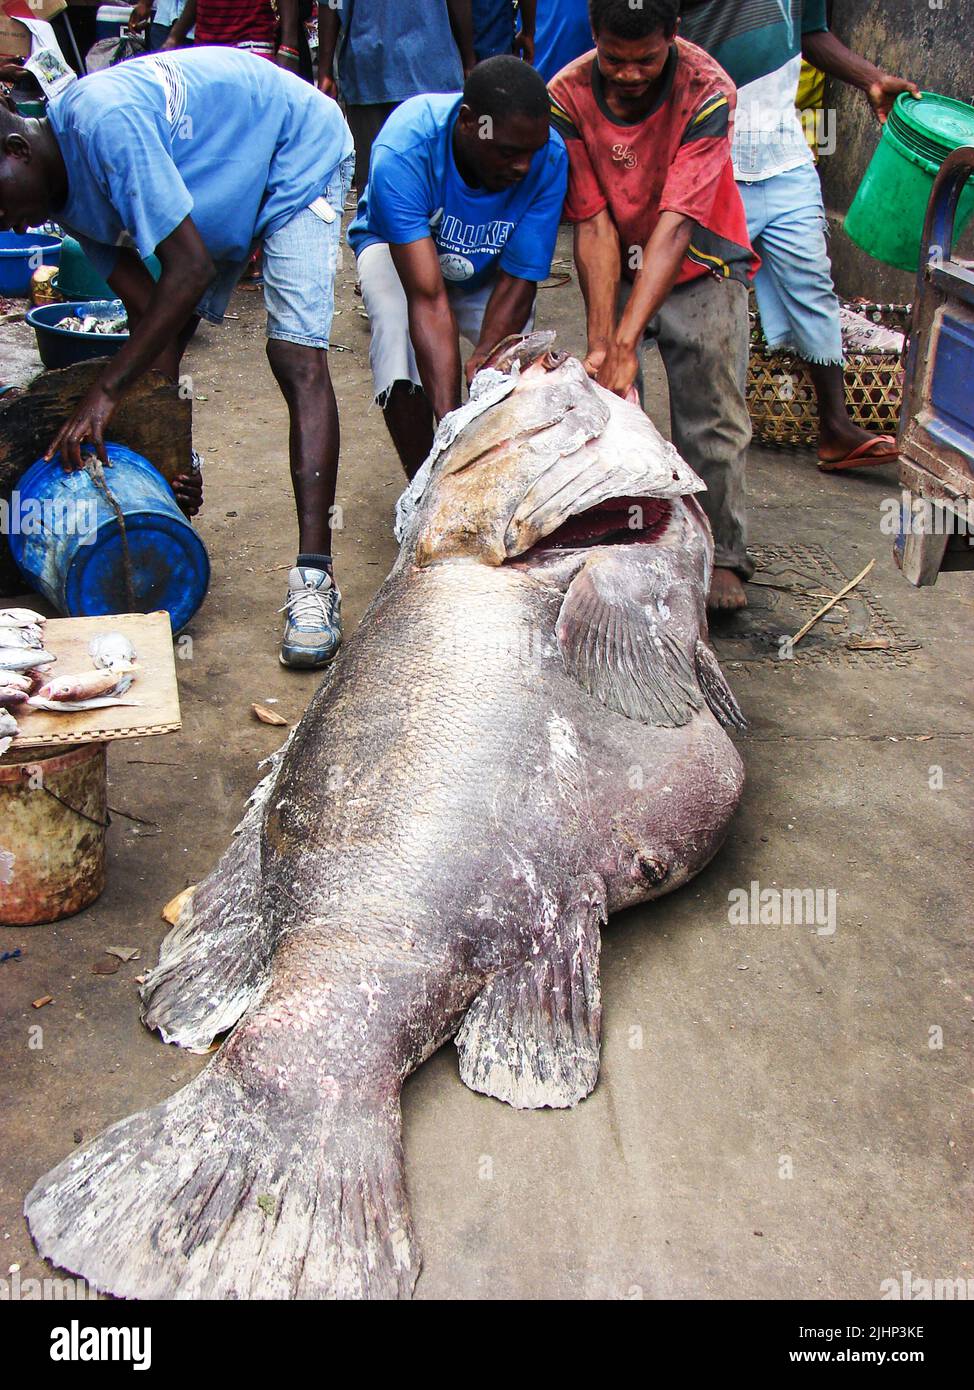 ZANZIBAR TOWN, TANZANIA - JANUARY ,07,2013: local fishermens caught a big fish and dragged it to the market Stock Photo